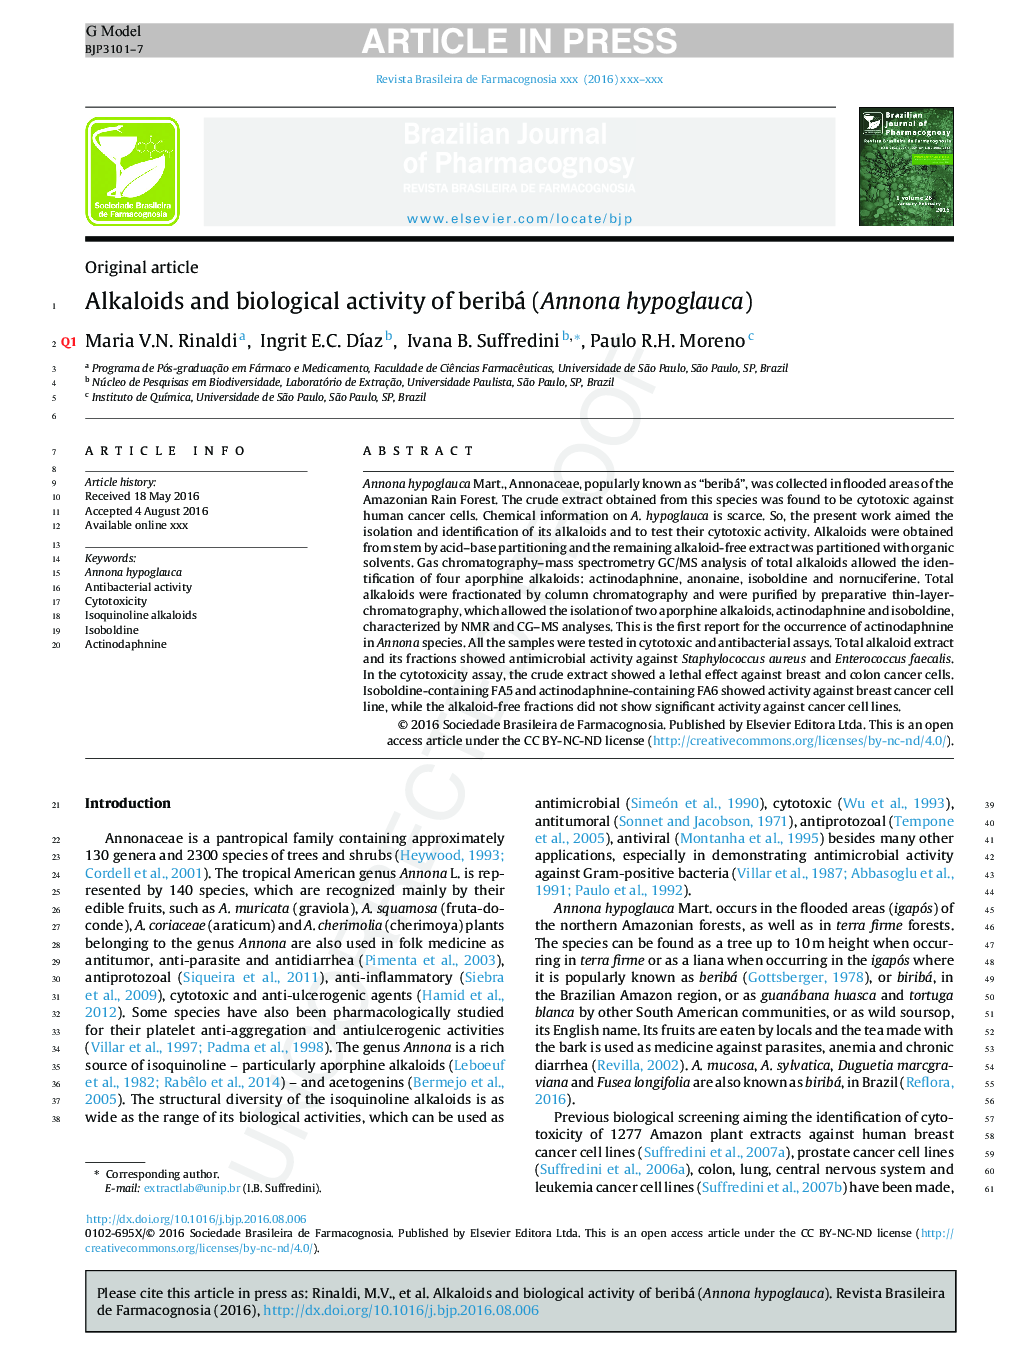 Alkaloids and biological activity of beribá (Annona hypoglauca)